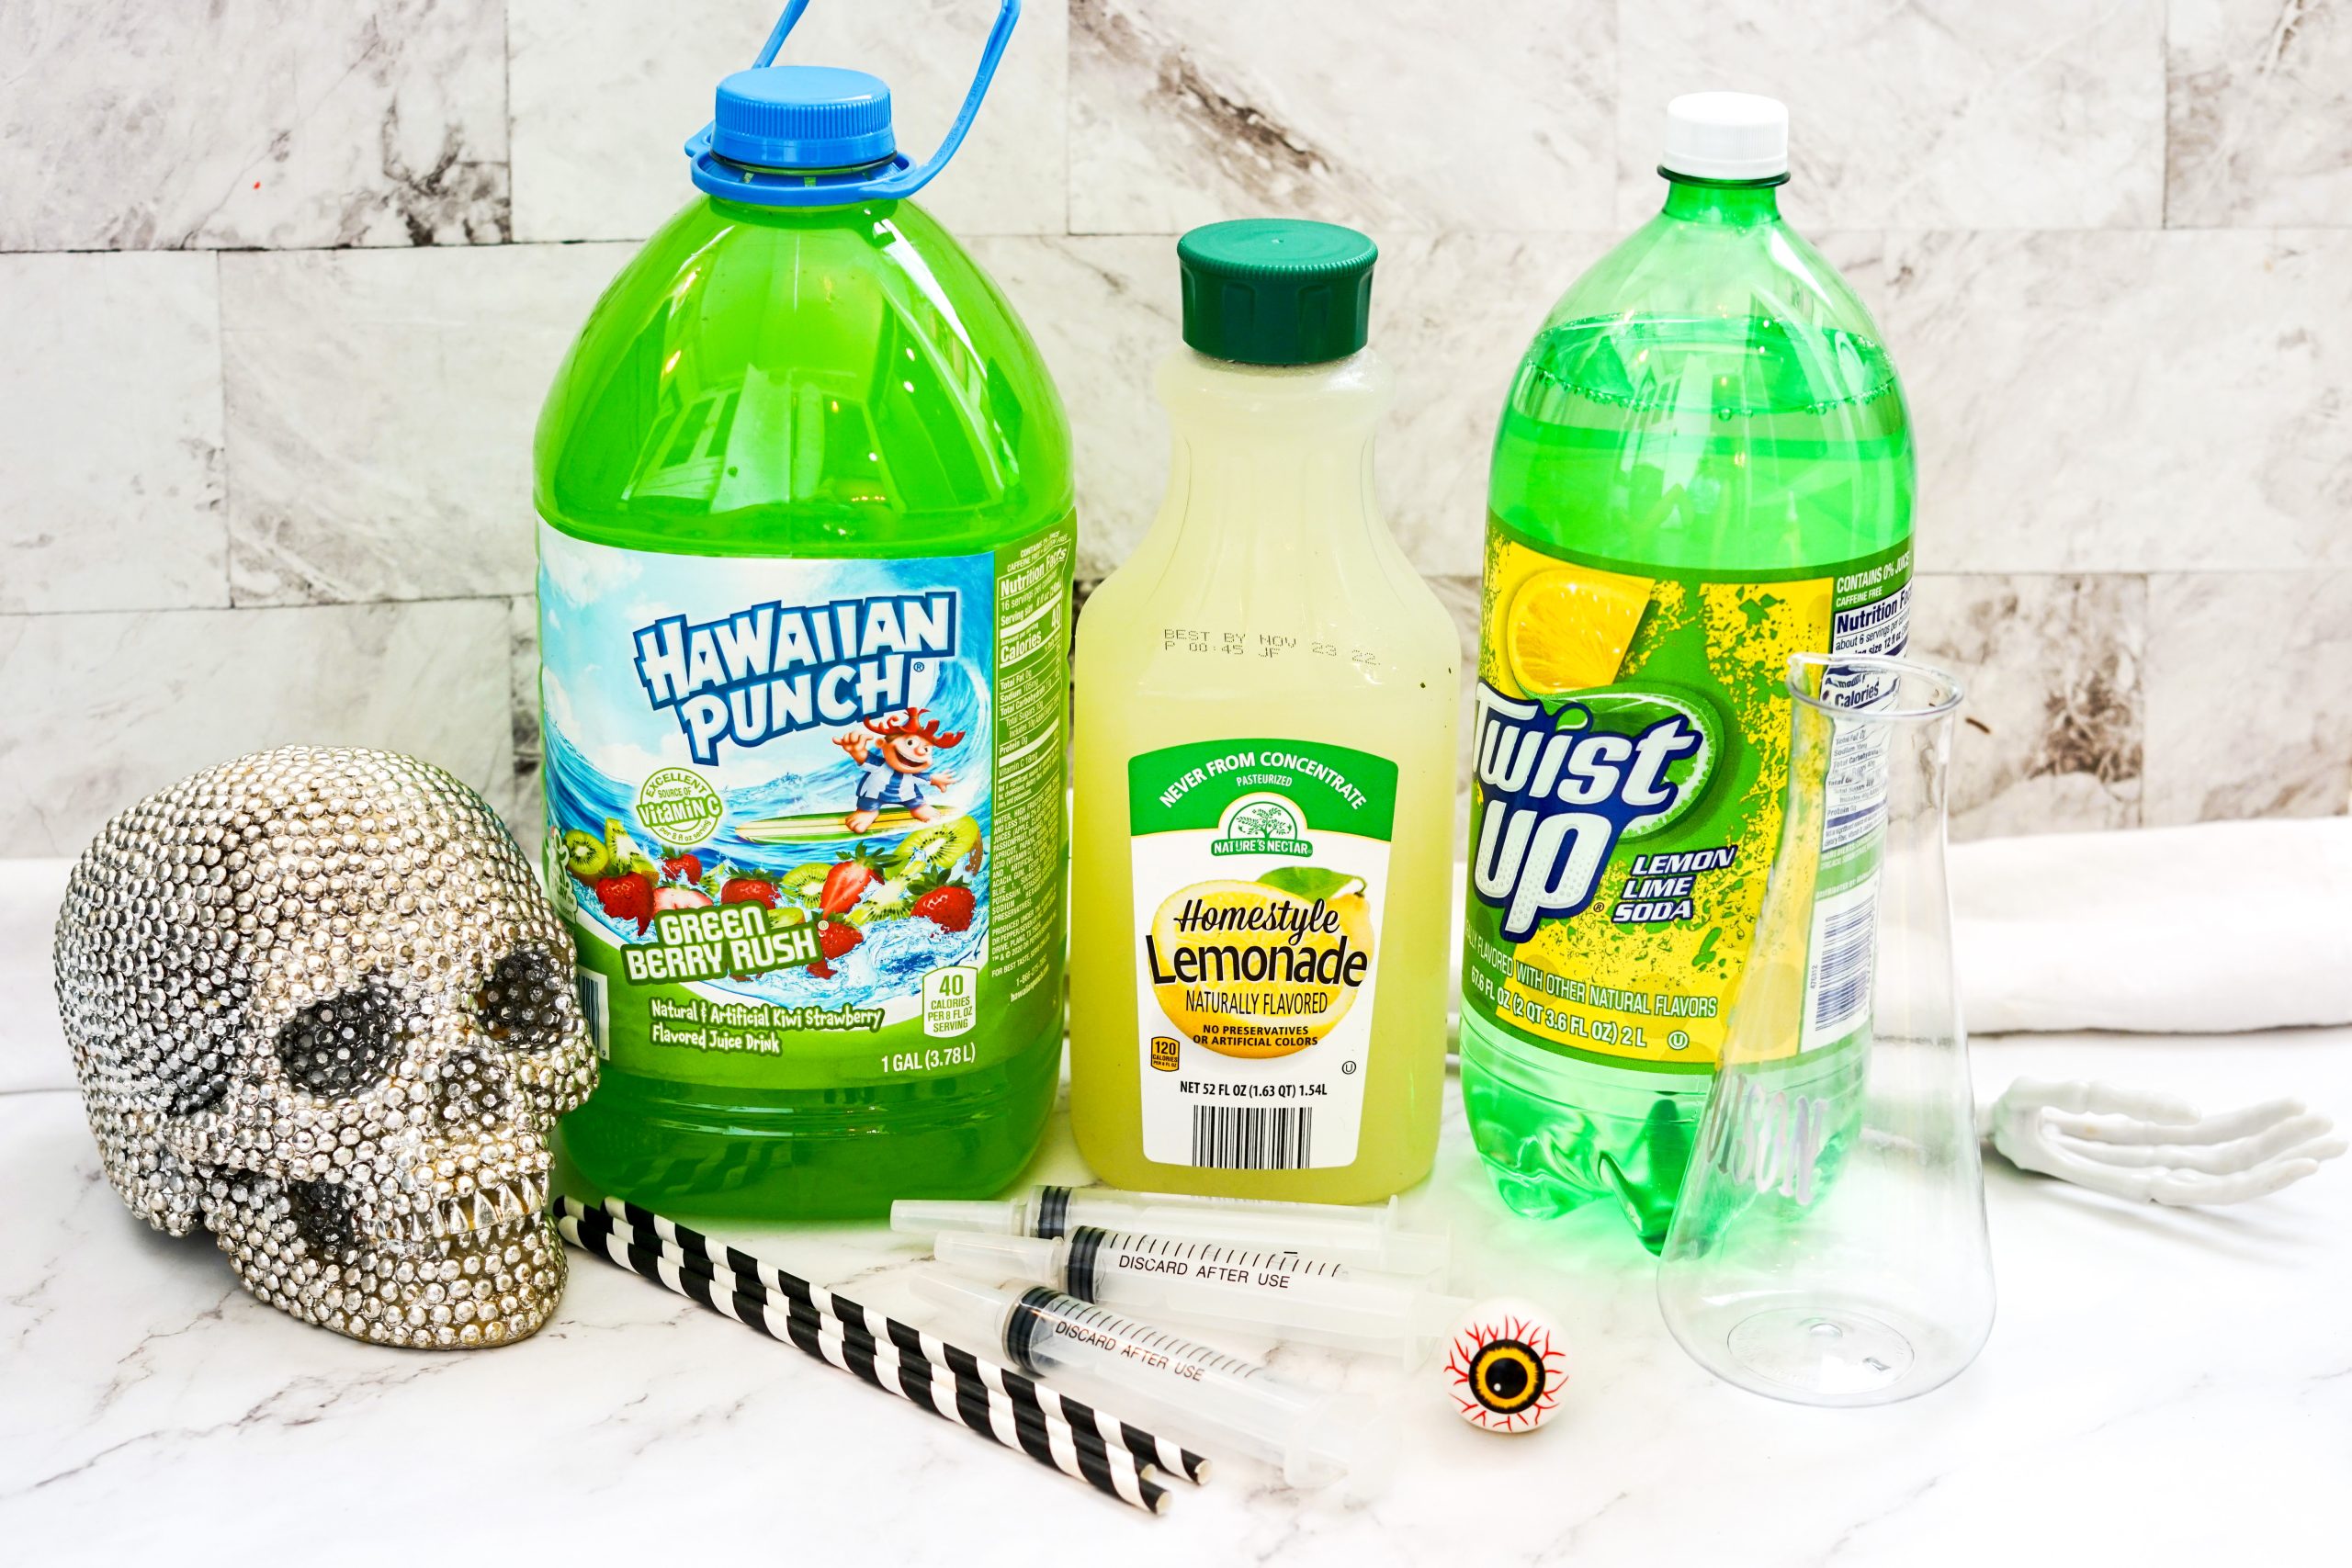 Green Hawaiian punch, lemonade, lemon lime soft drink, and straws on a counter